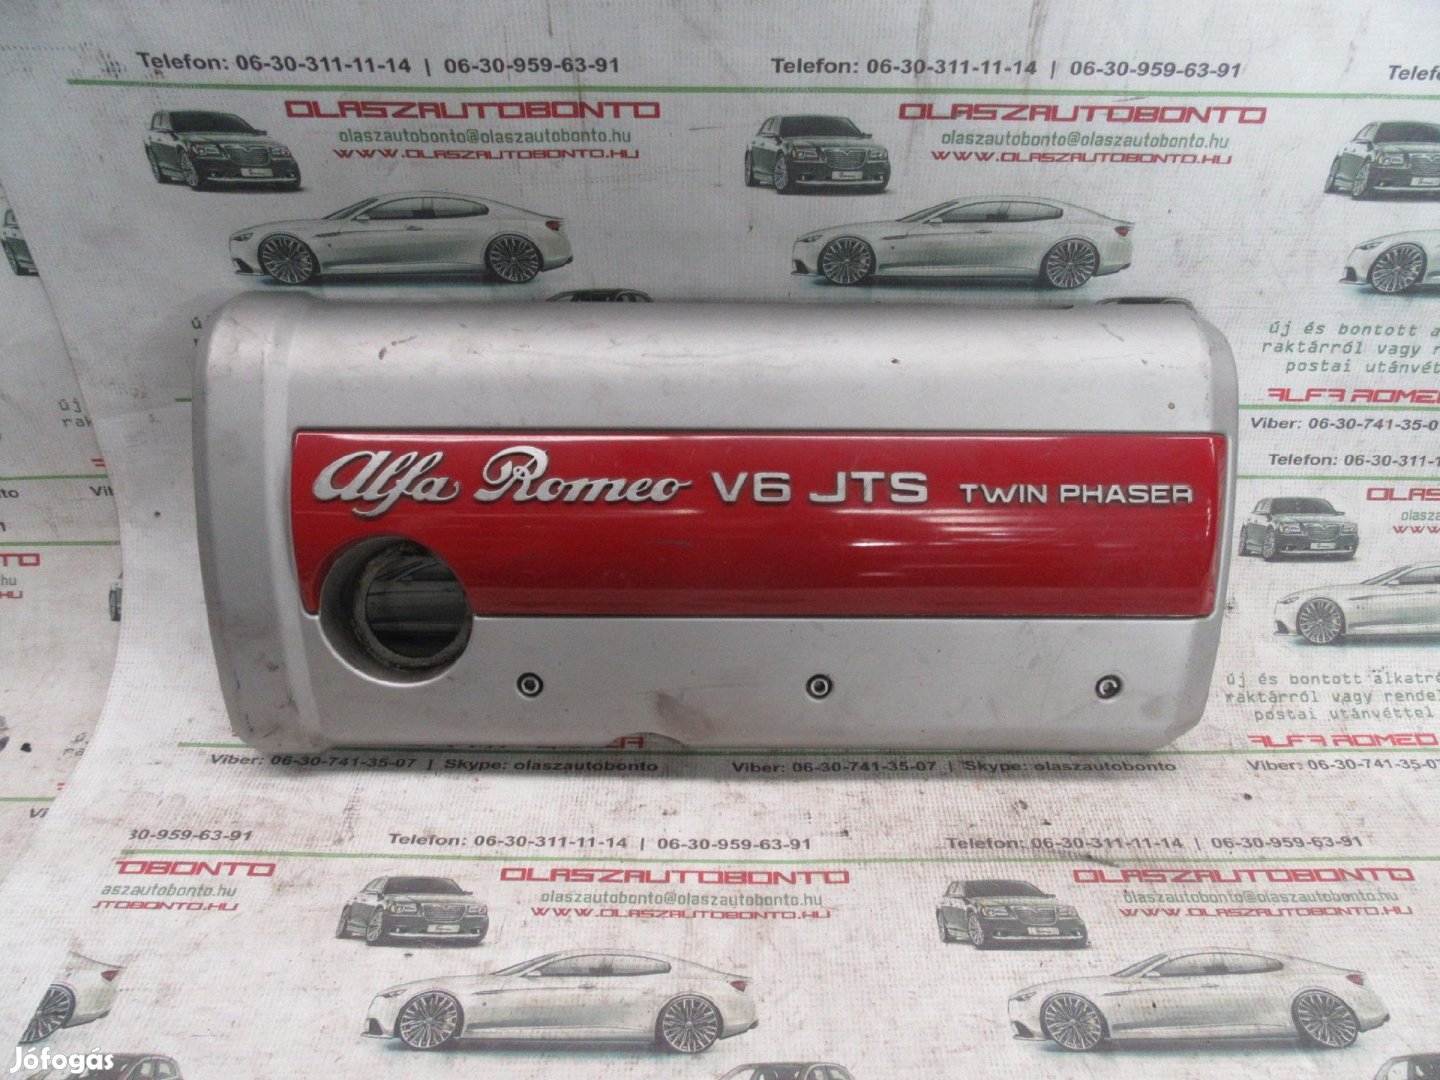 Alfa Romeo 159 3,2 v6 Jts 24v , 55194013 számú motor burkolat